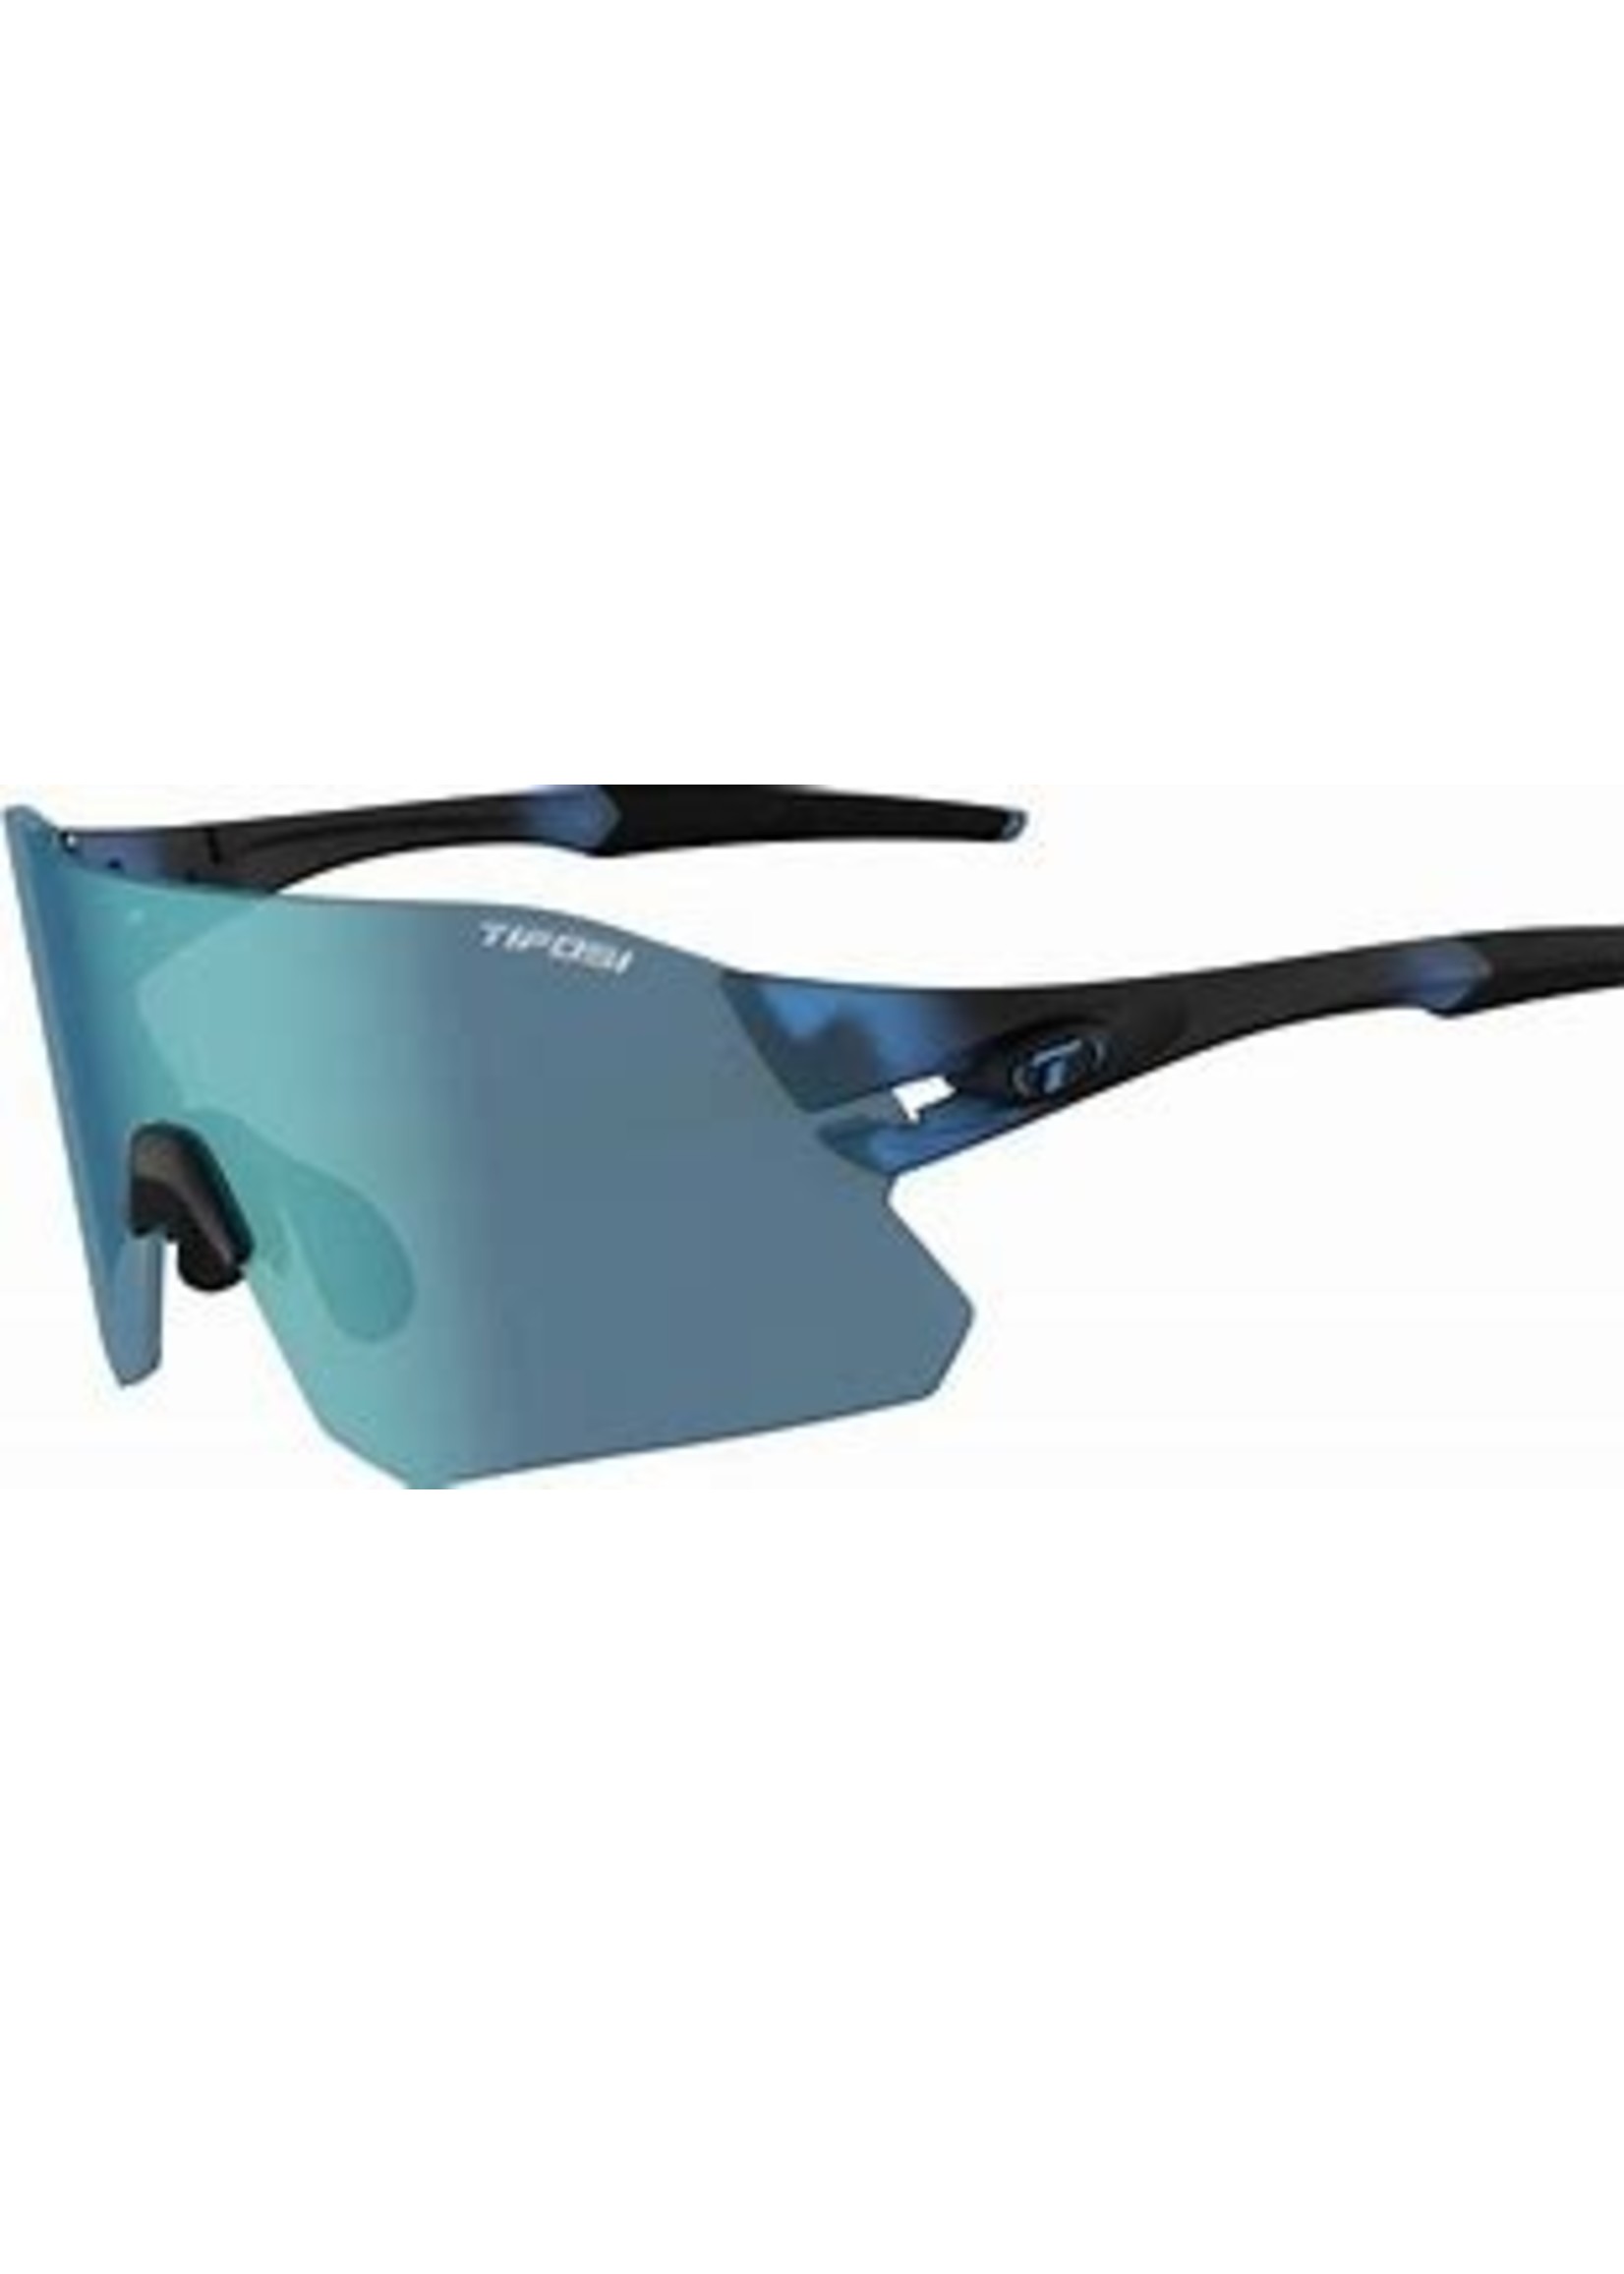 Rail, Crystal Blue Interchangeable Sunglasses